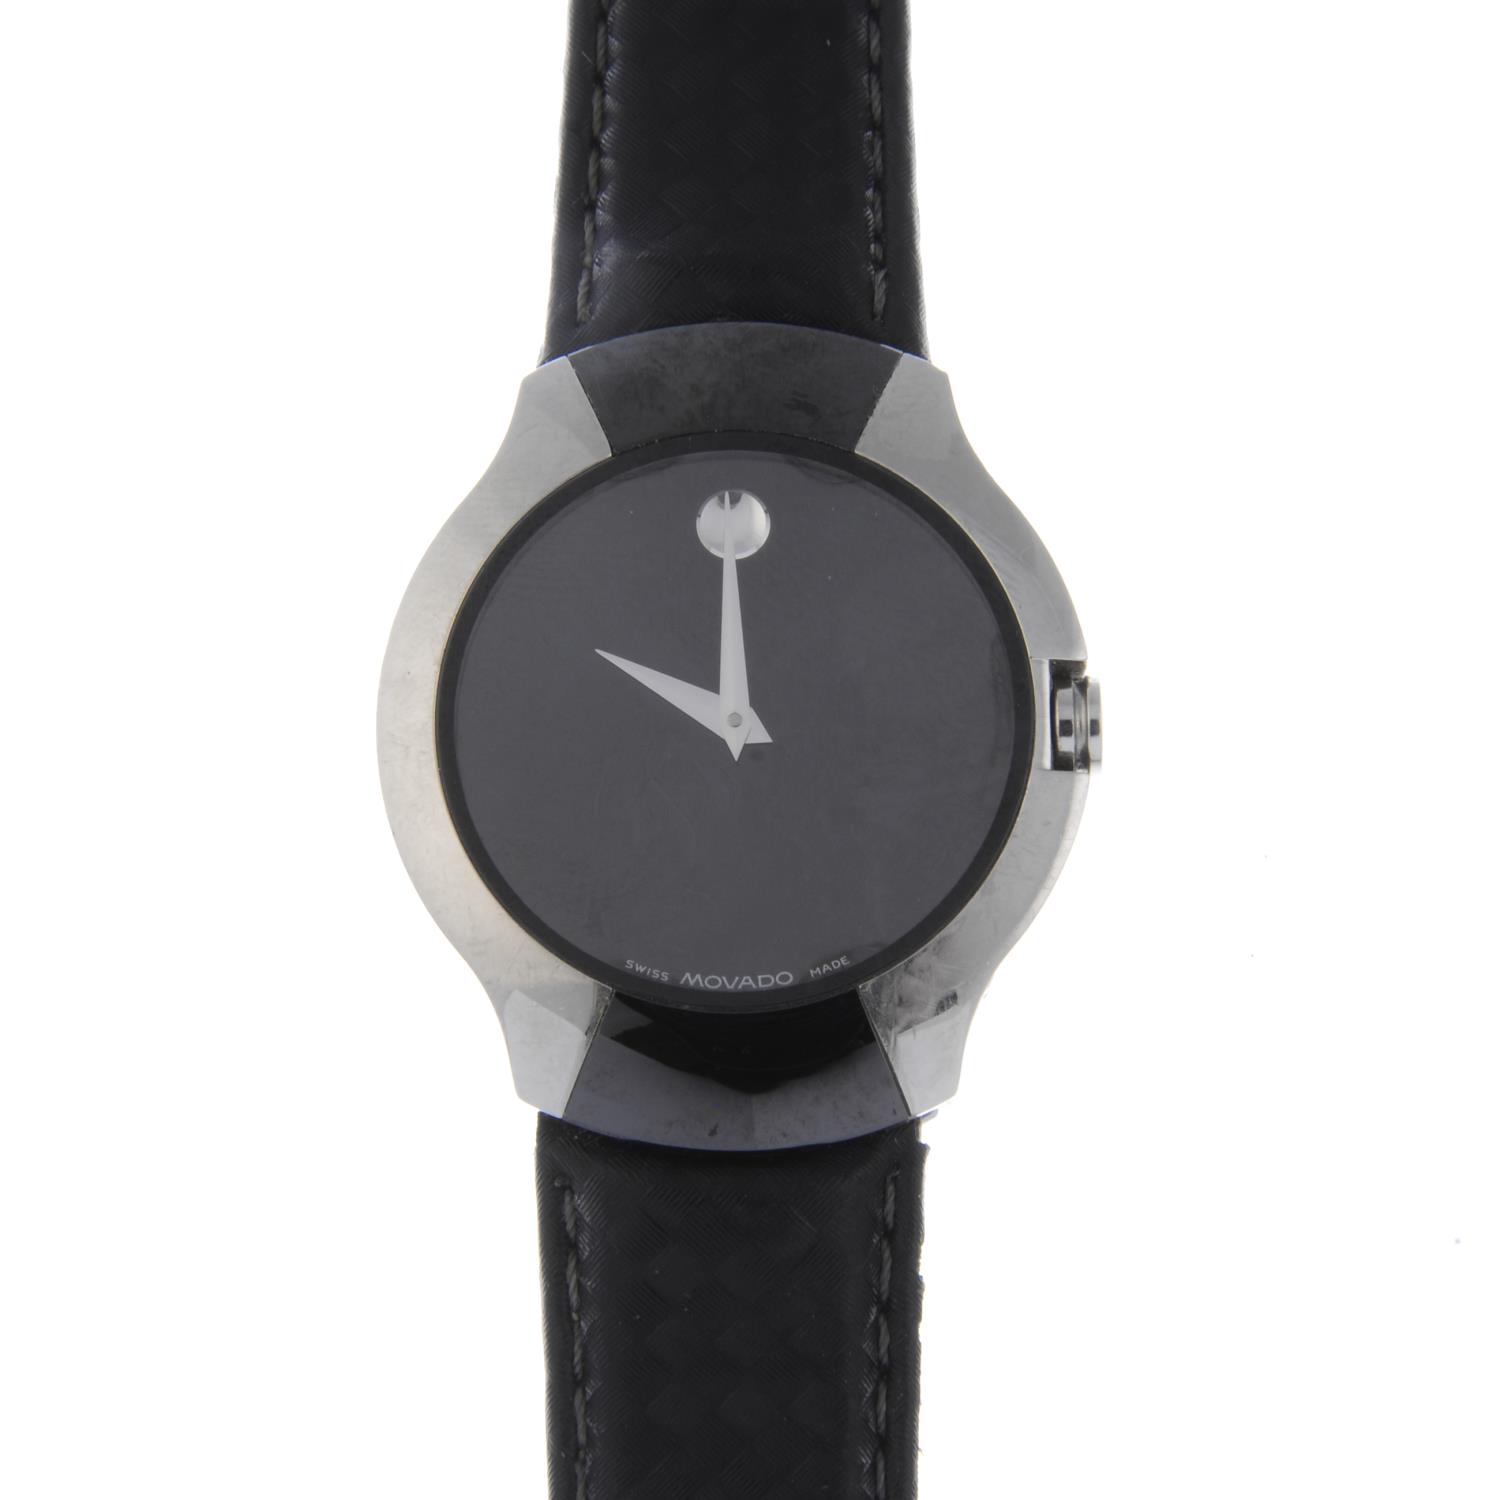 MOVADO - a gentleman's Museum wrist watch. - Image 5 of 6